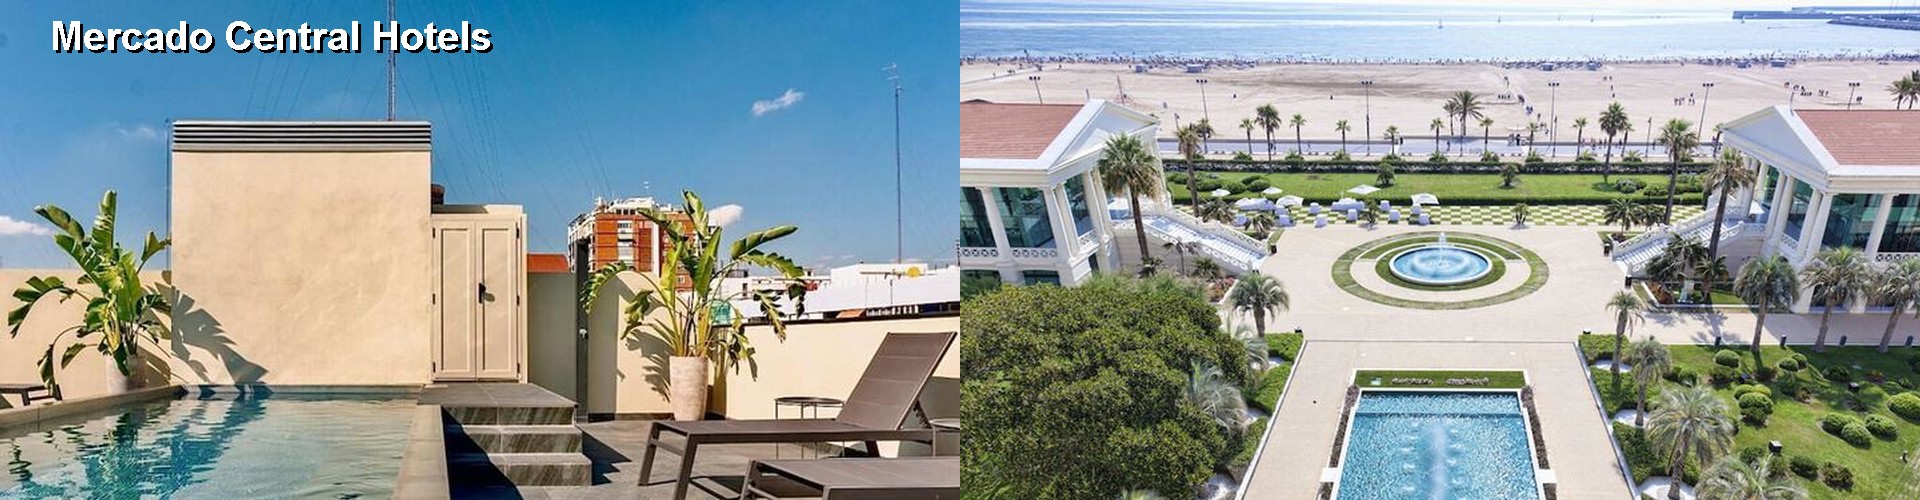 5 Best Hotels near Mercado Central